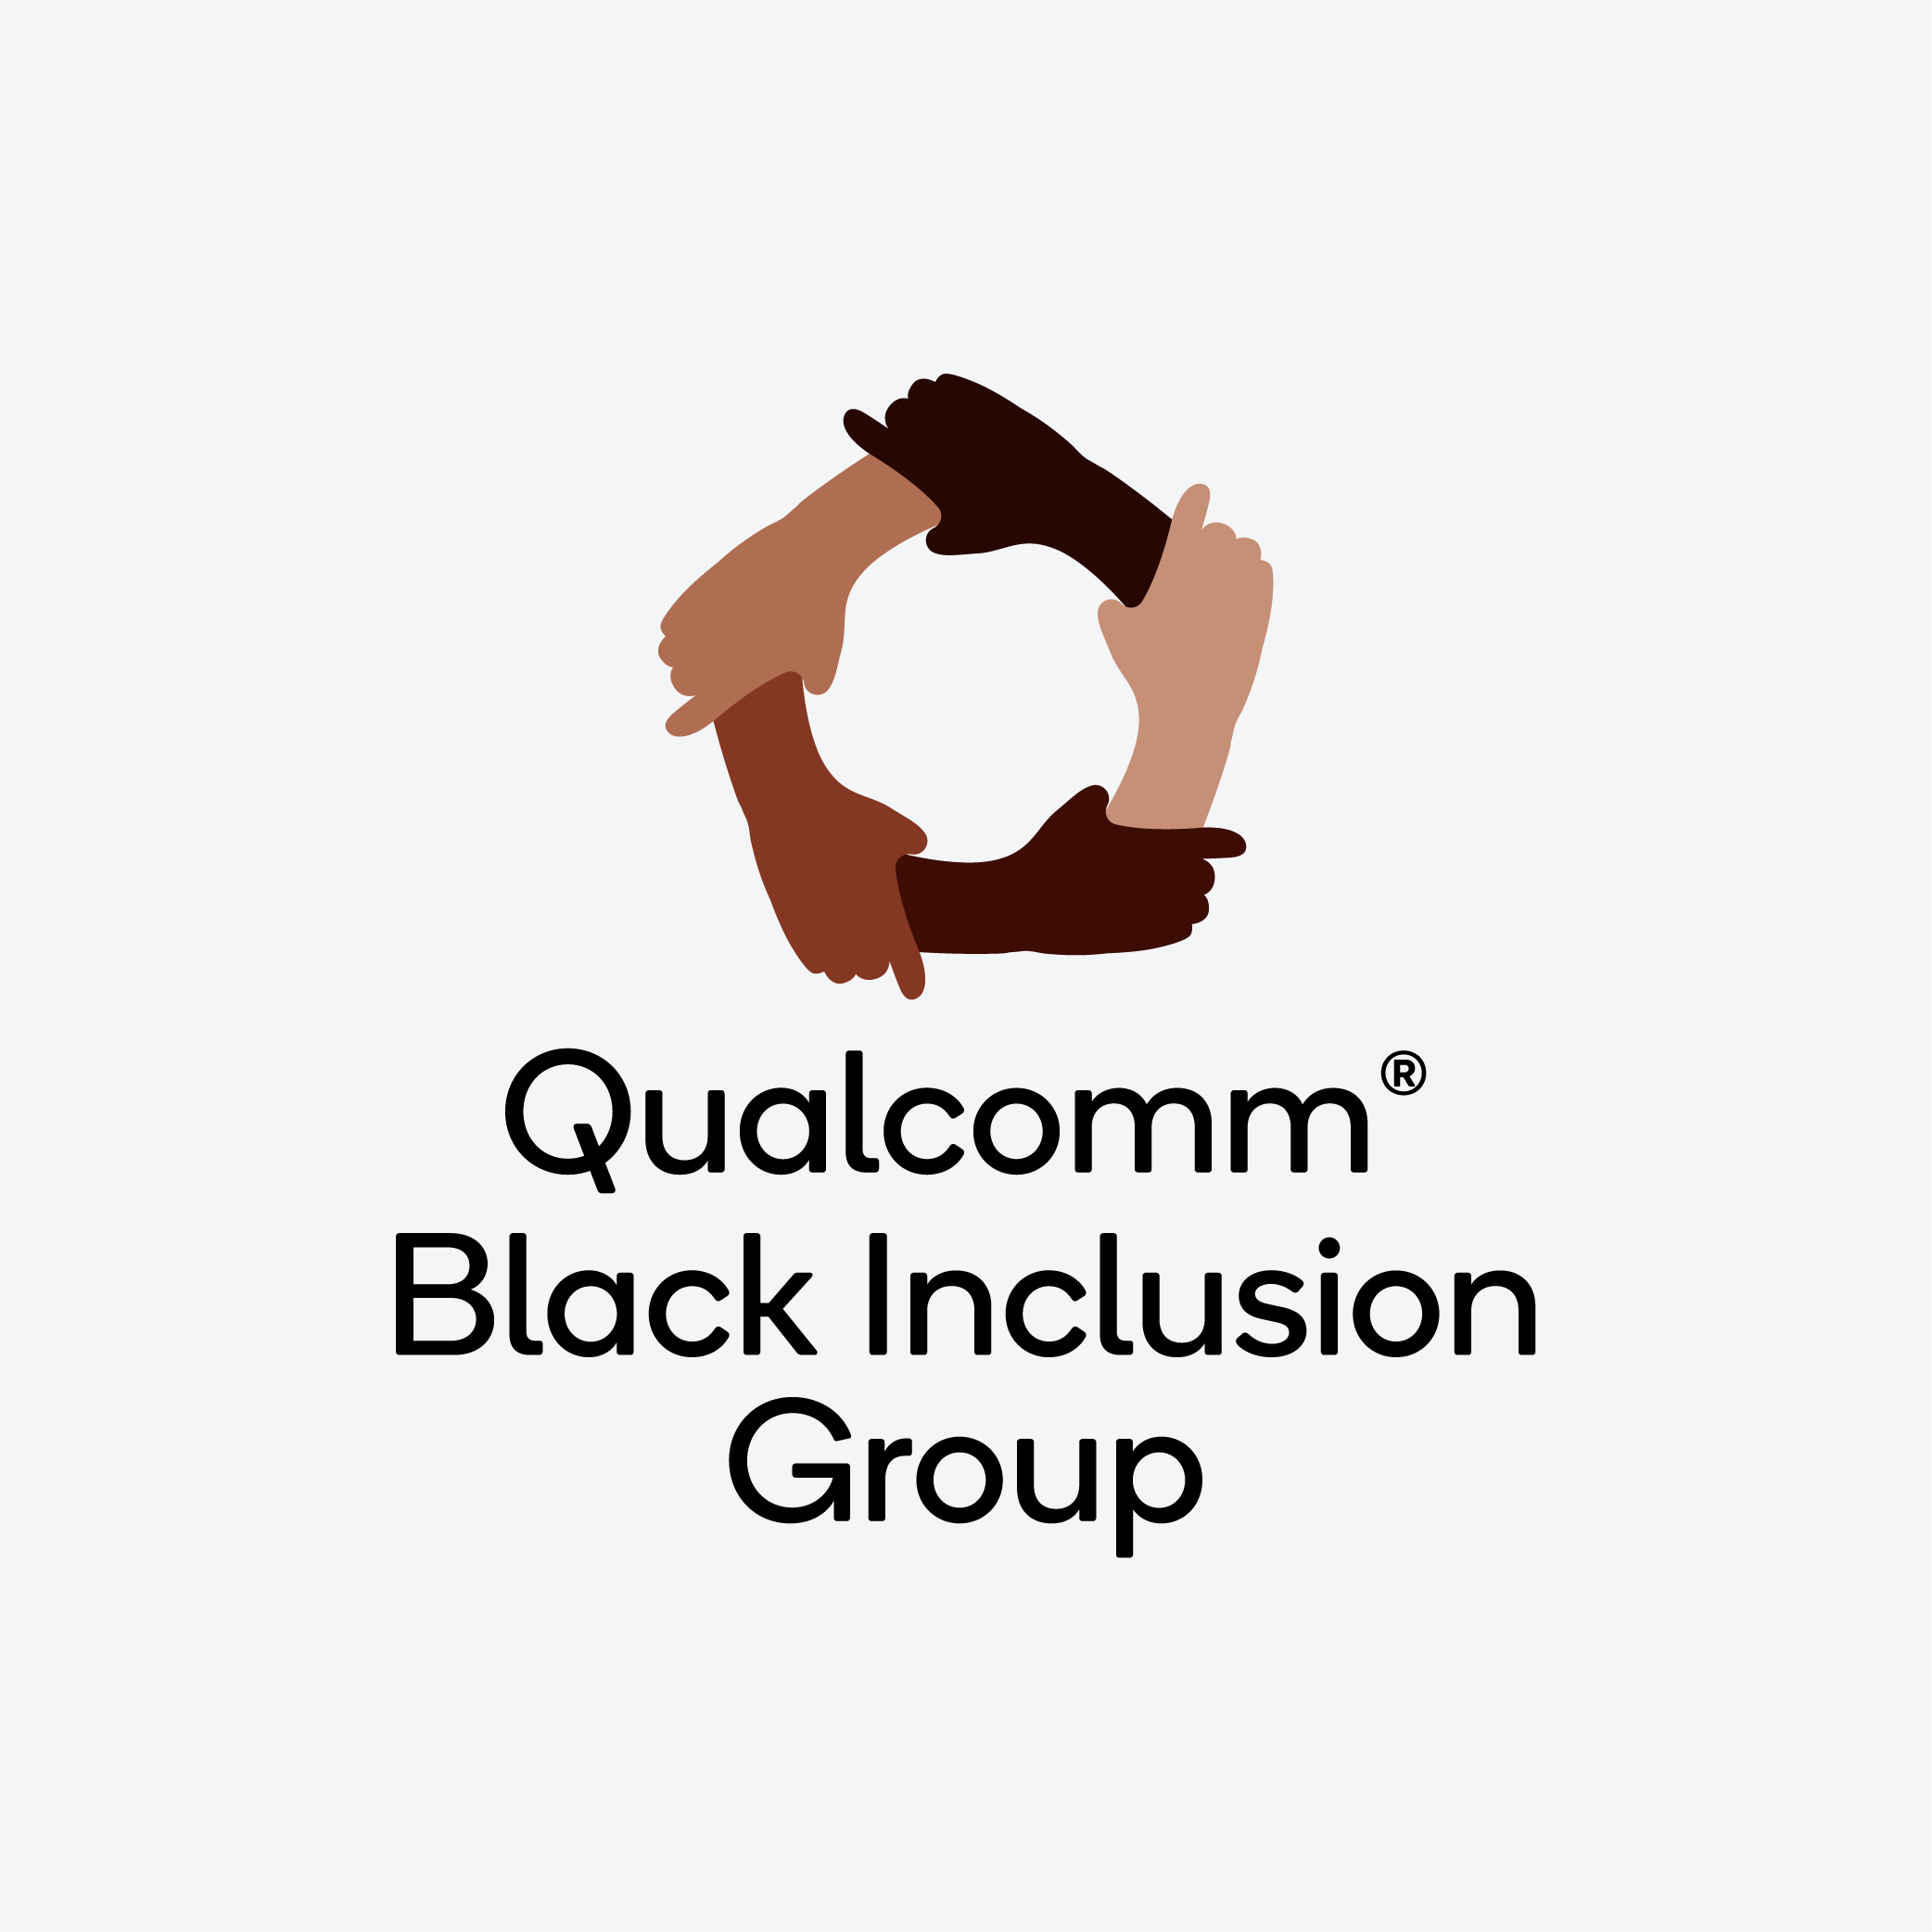 Qualcomm Black Inclusion Group Logo